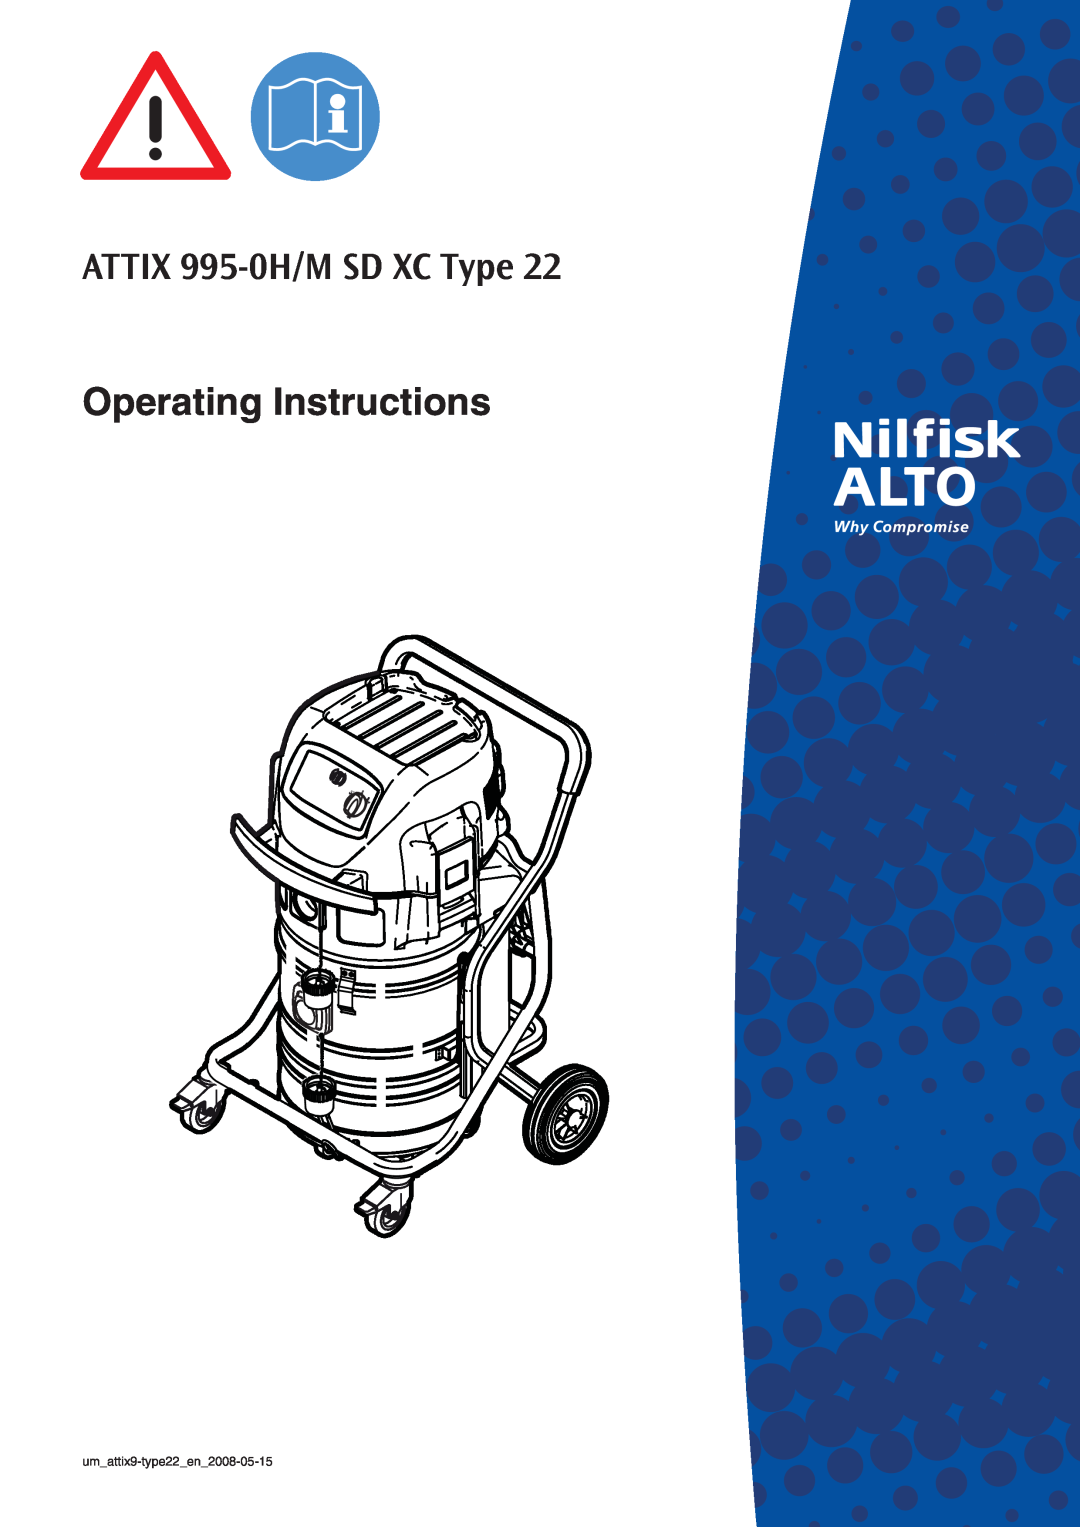 Nilfisk-ALTO 995-0H/M SD XC operating instructions ATTIX 995-0H/MSD XC Type, Operating Instructions, um attix9-type22 en 